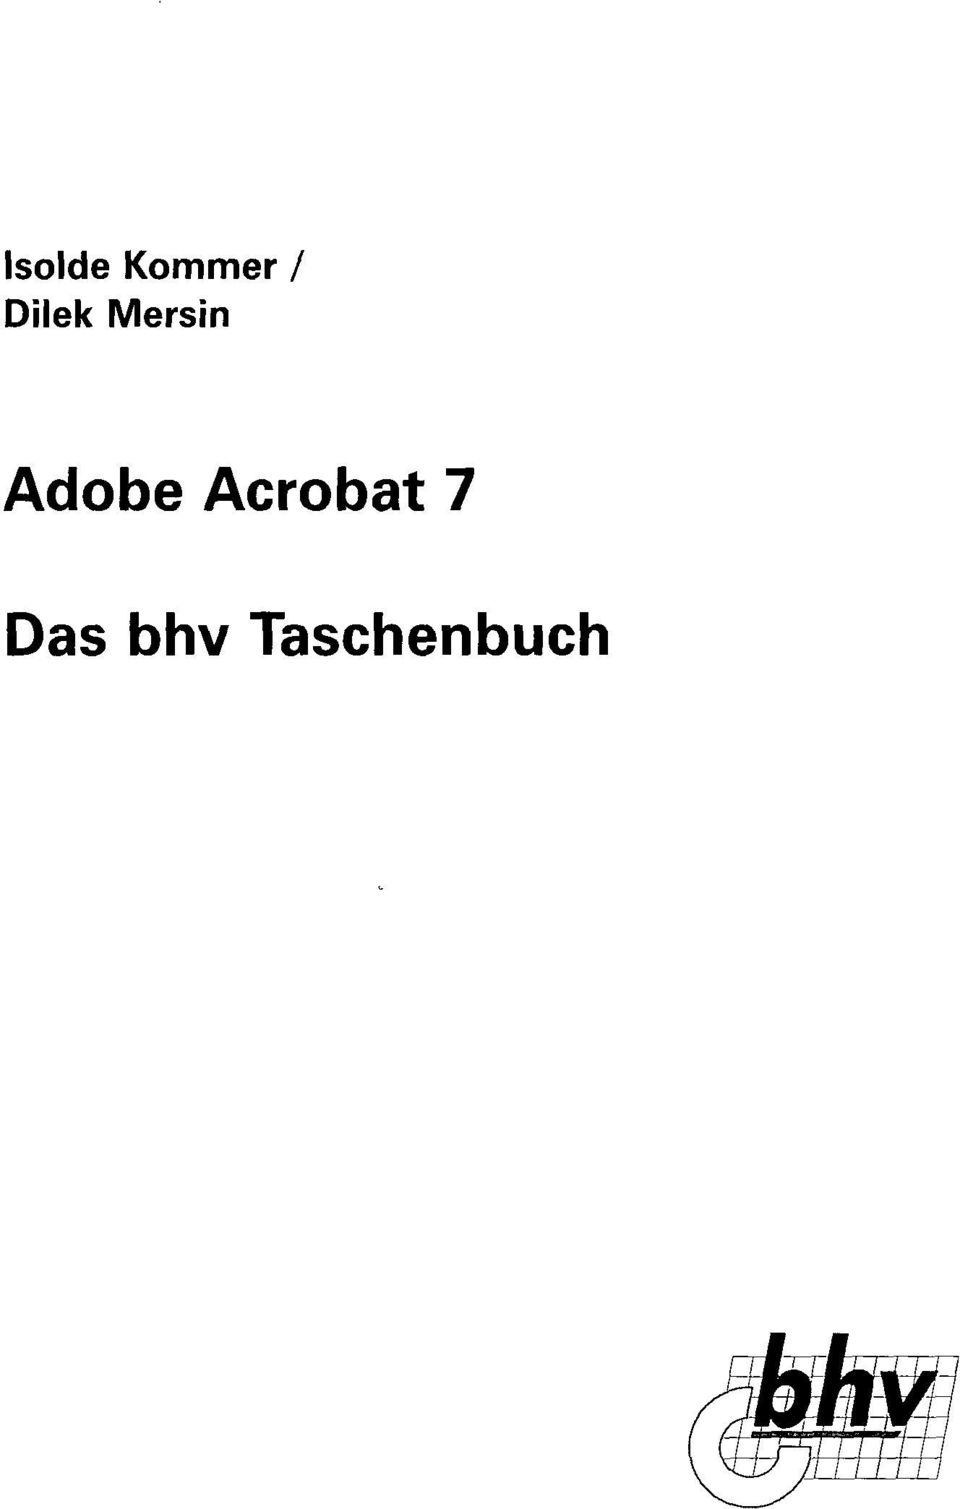 Adobe Acrobat 7